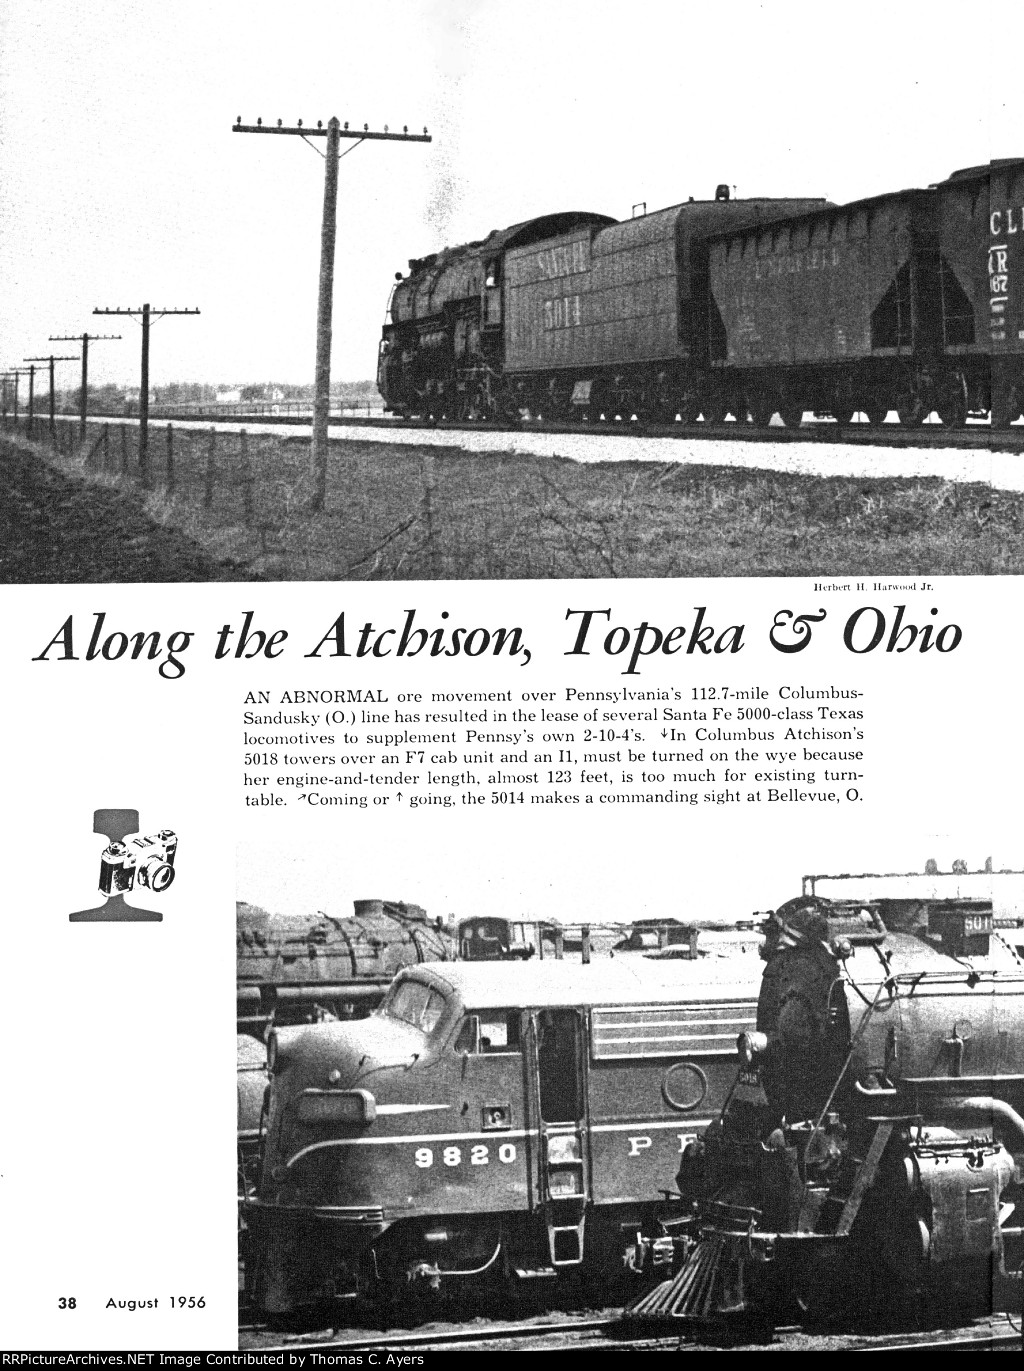 "Atchison, Topeka, & Ohio," Page 38, 1956